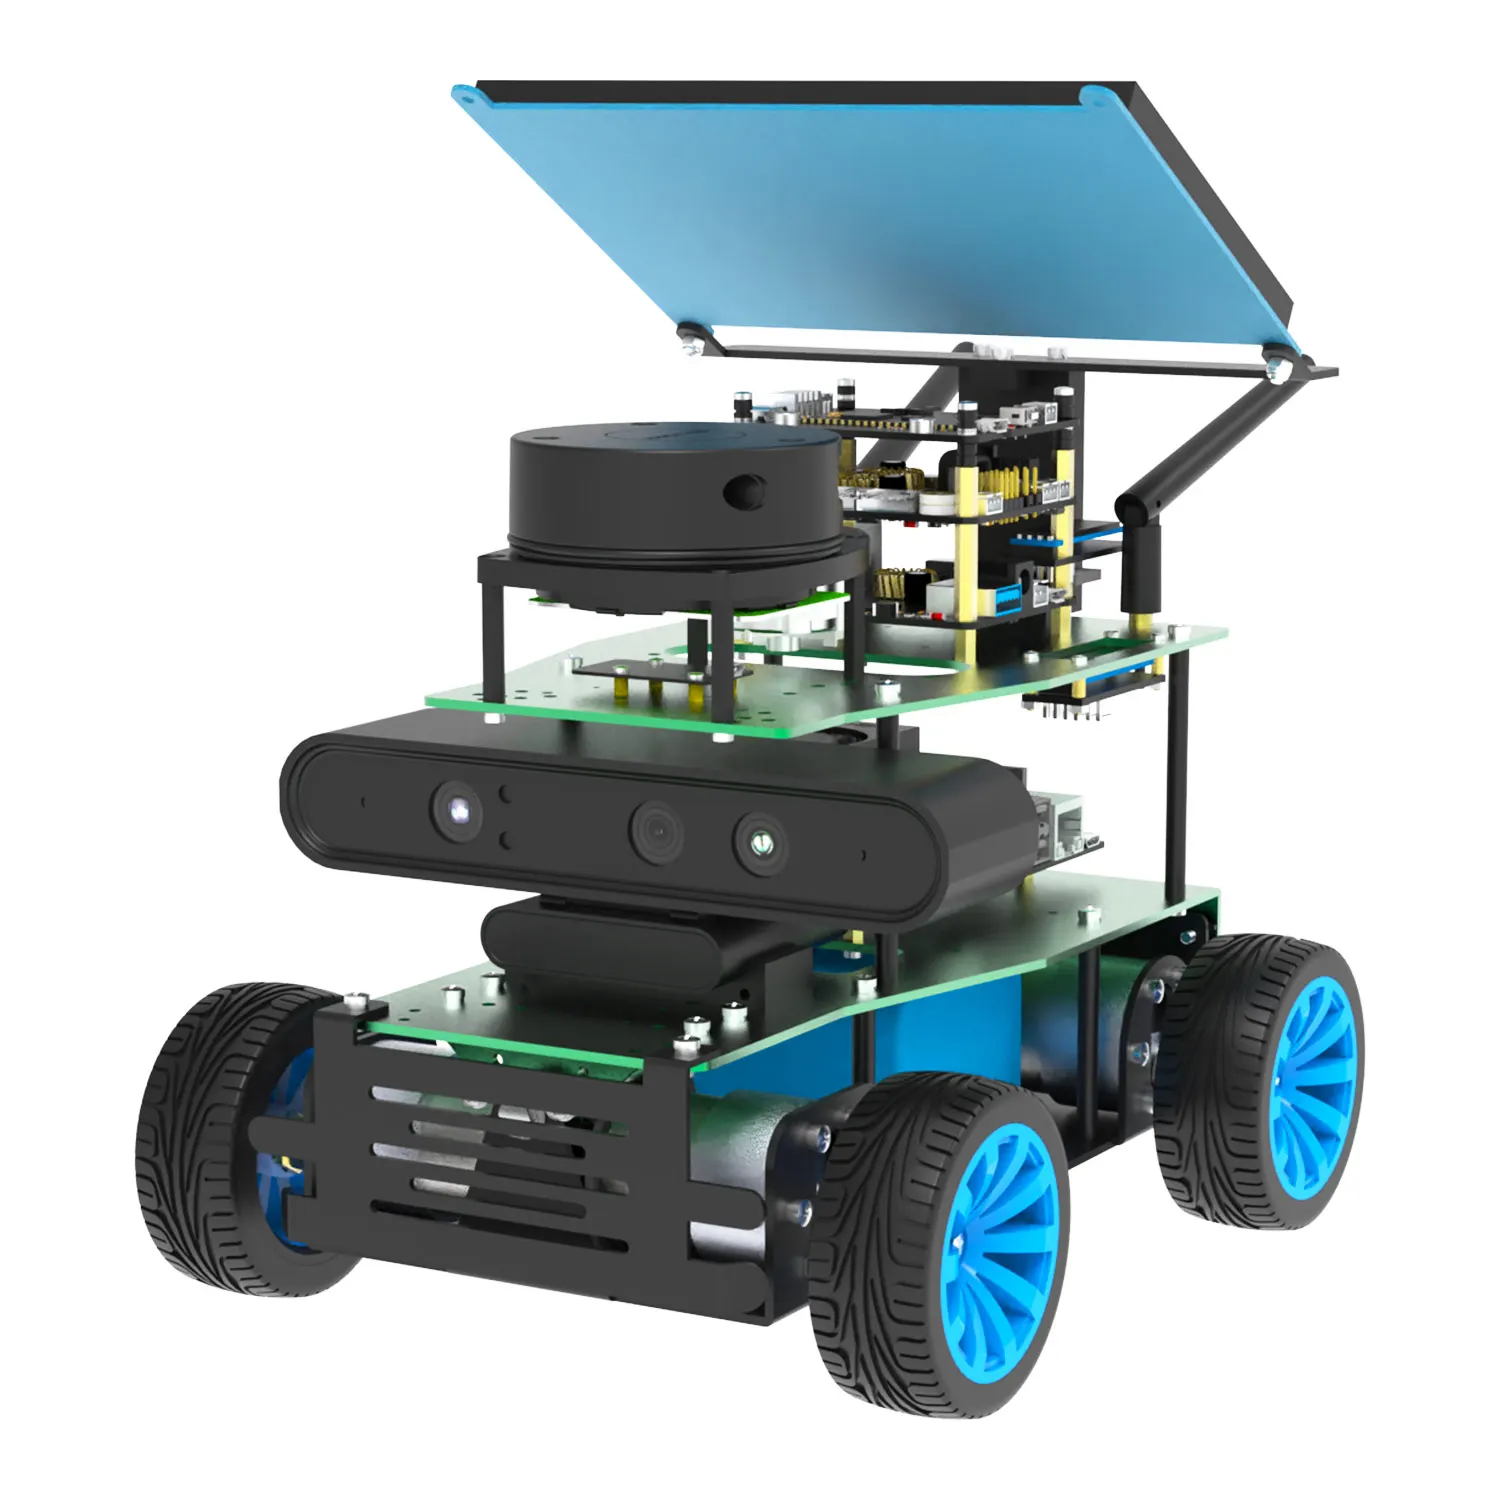 ROSMASTER X1 ROS Robot 4WD DIY Smart Car Kit Lidar SLAM Mapping Python Education для Jetson NANO 4GB/TX2 NX/RaspberryPi 4B 0